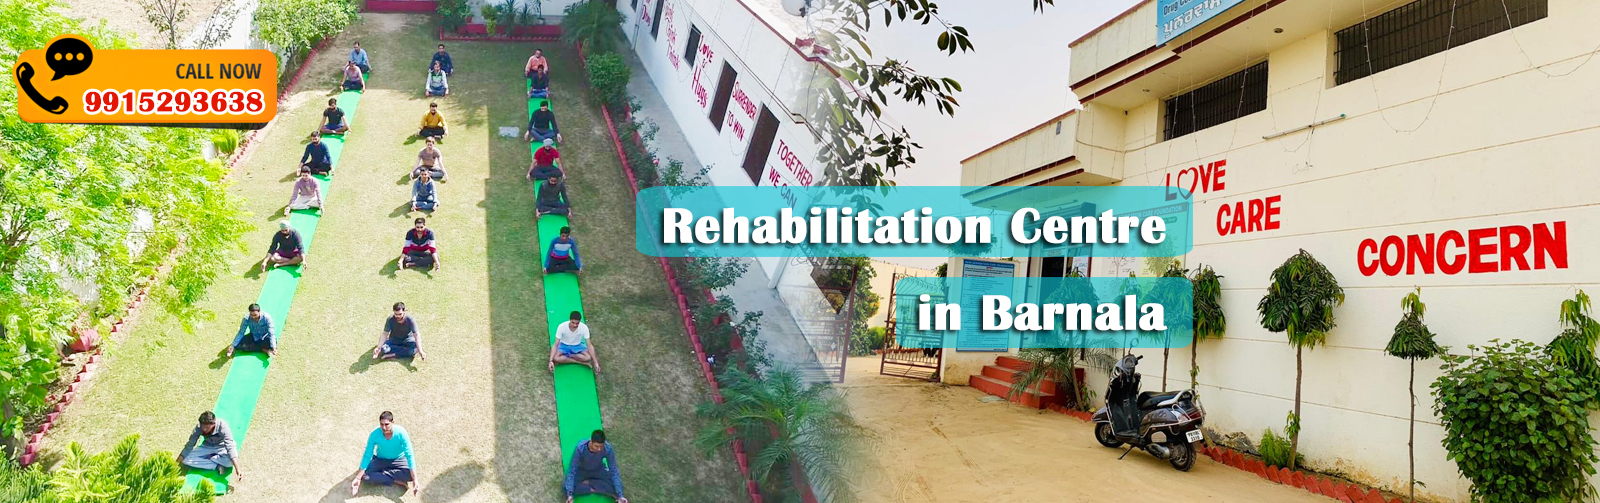 Rehabilitation Centre in Barnala